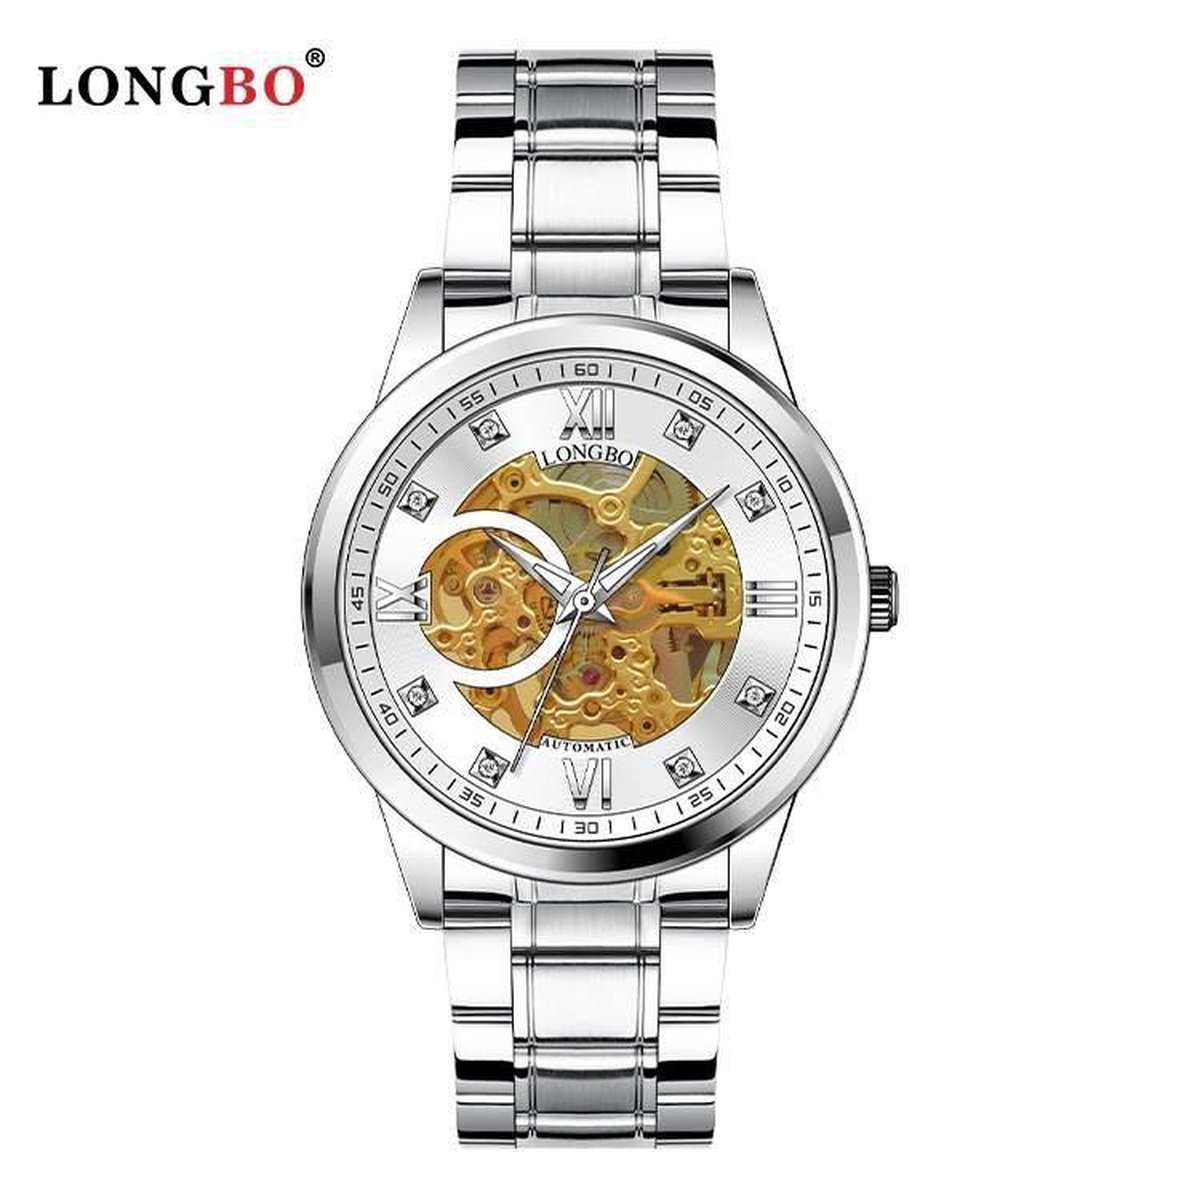 Longbo - Unisex Horloge - Skeleton - Zilveren Stalen Band - Zilver-Wit-Goud - Ø 40mm - Automatic